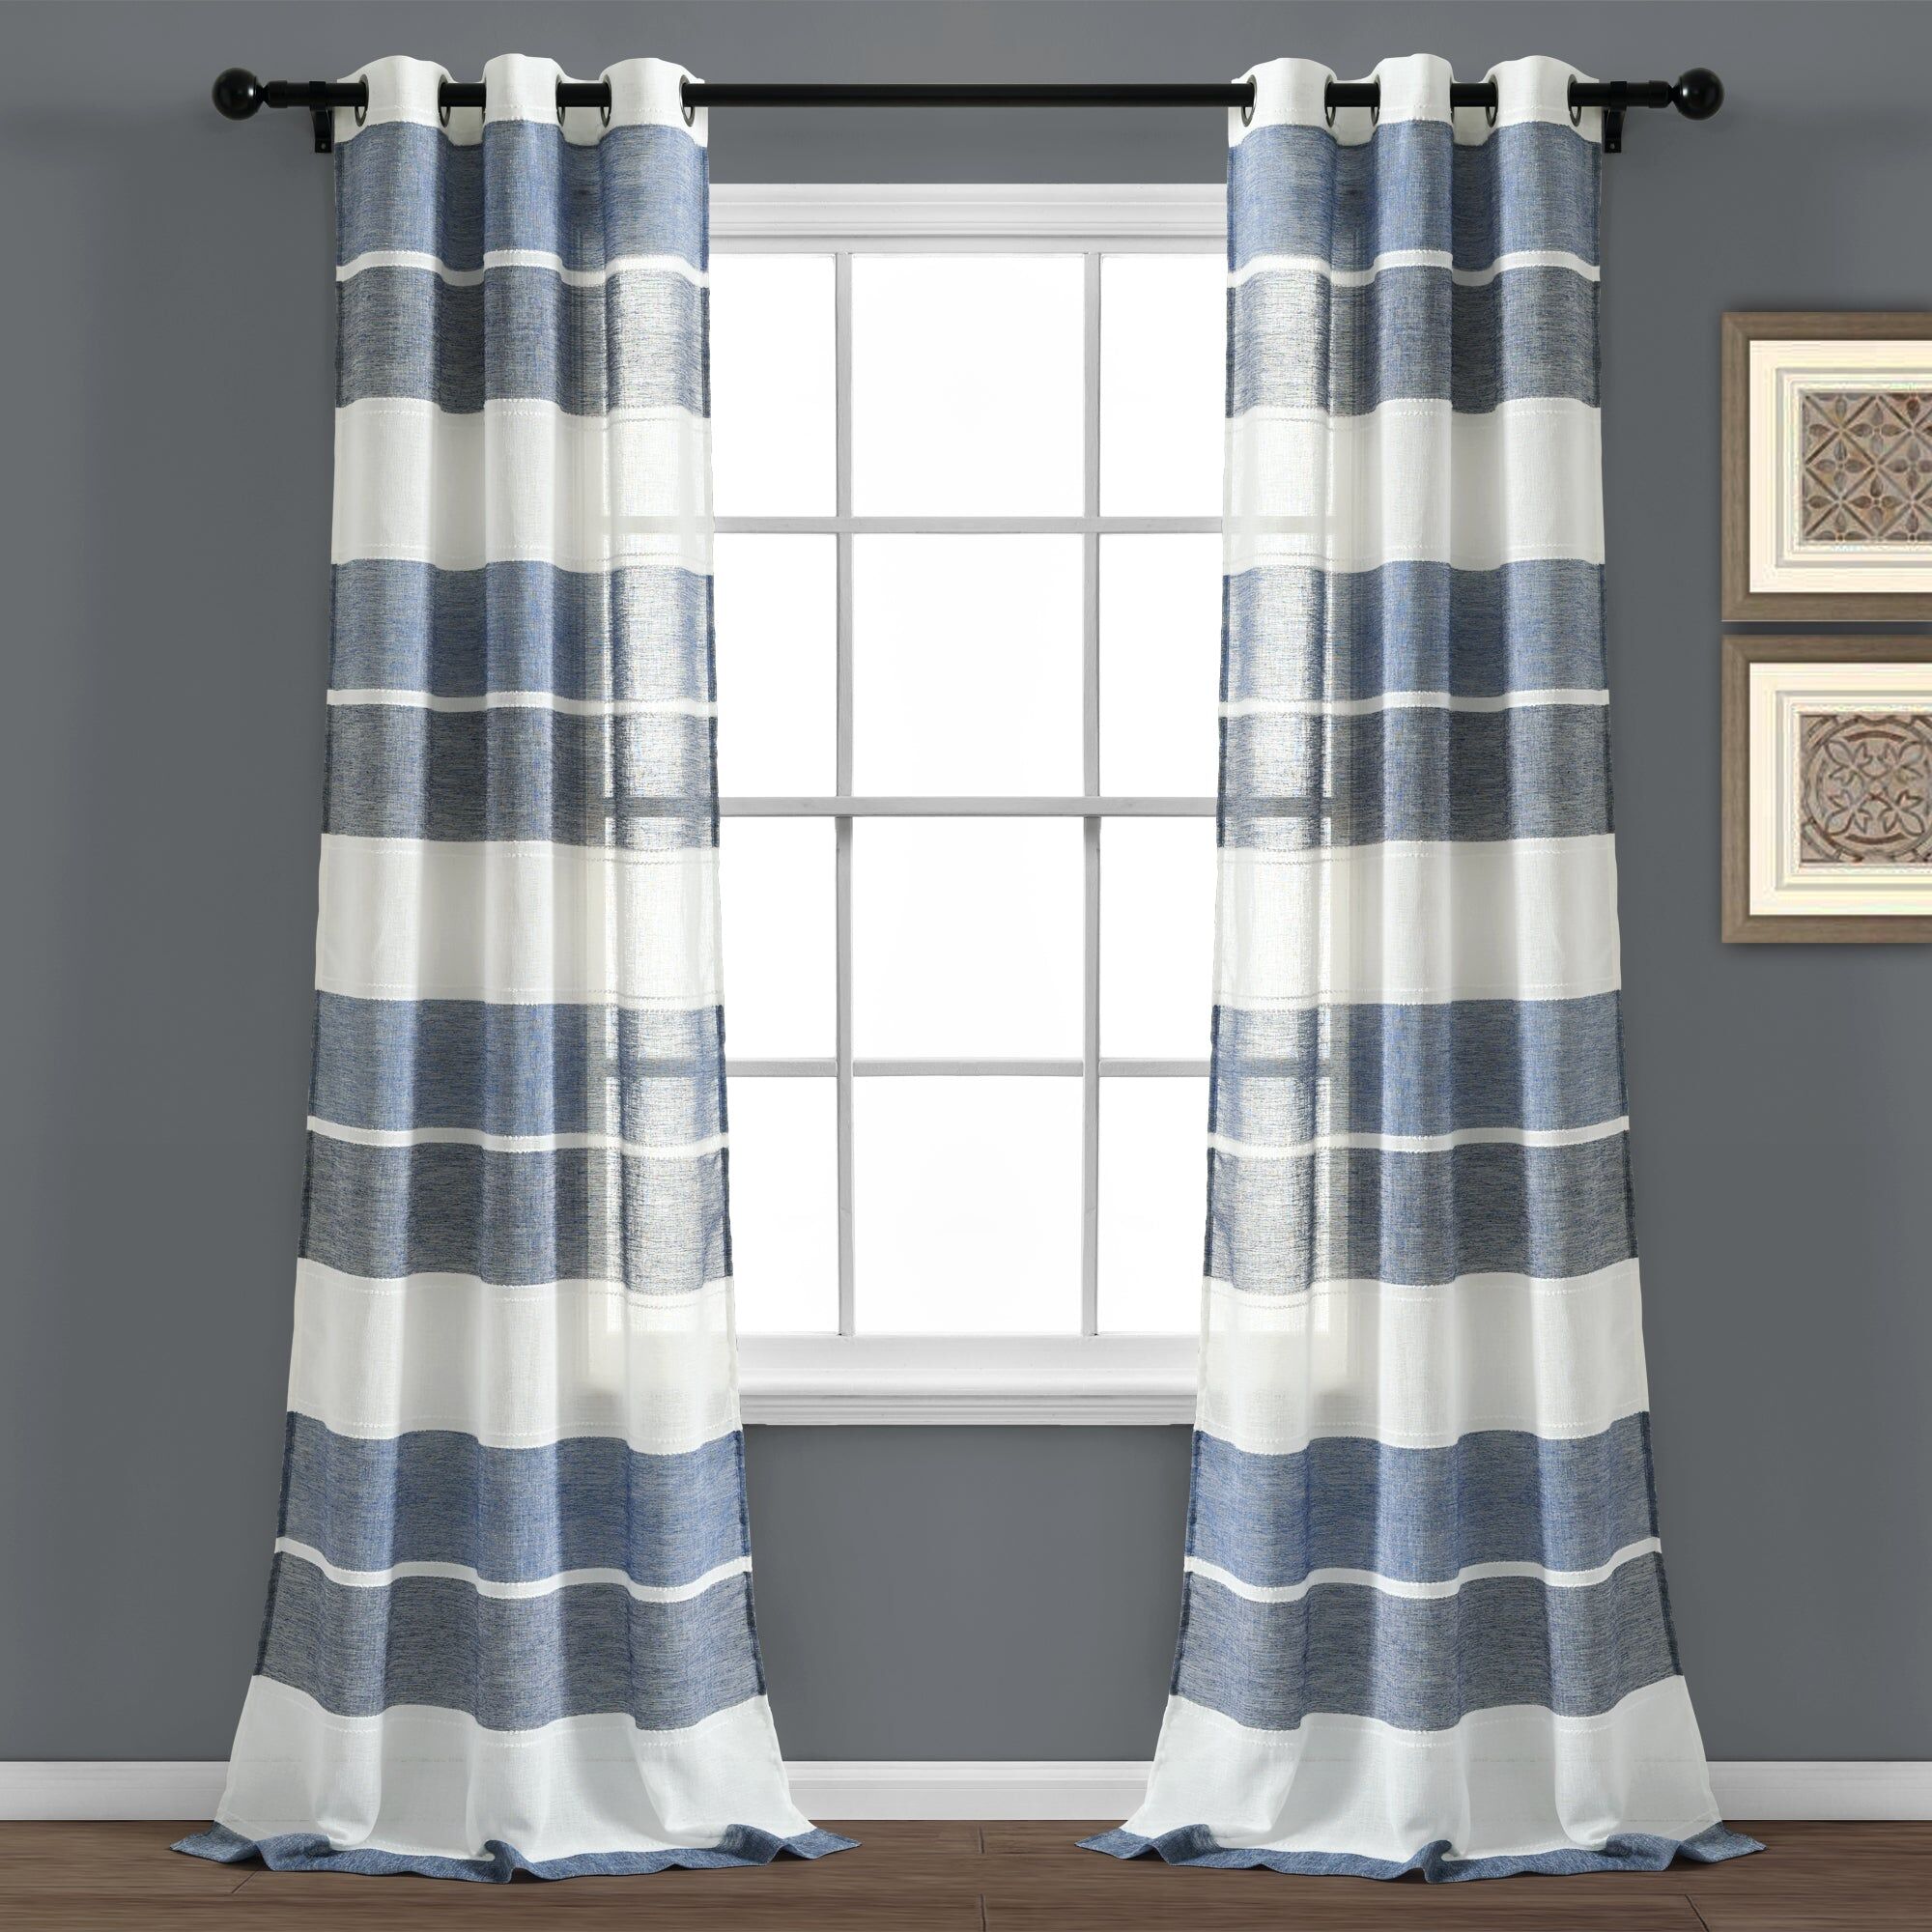 Lush Decor Textured Stripe Grommet Sheer Window Curtain Panel Set